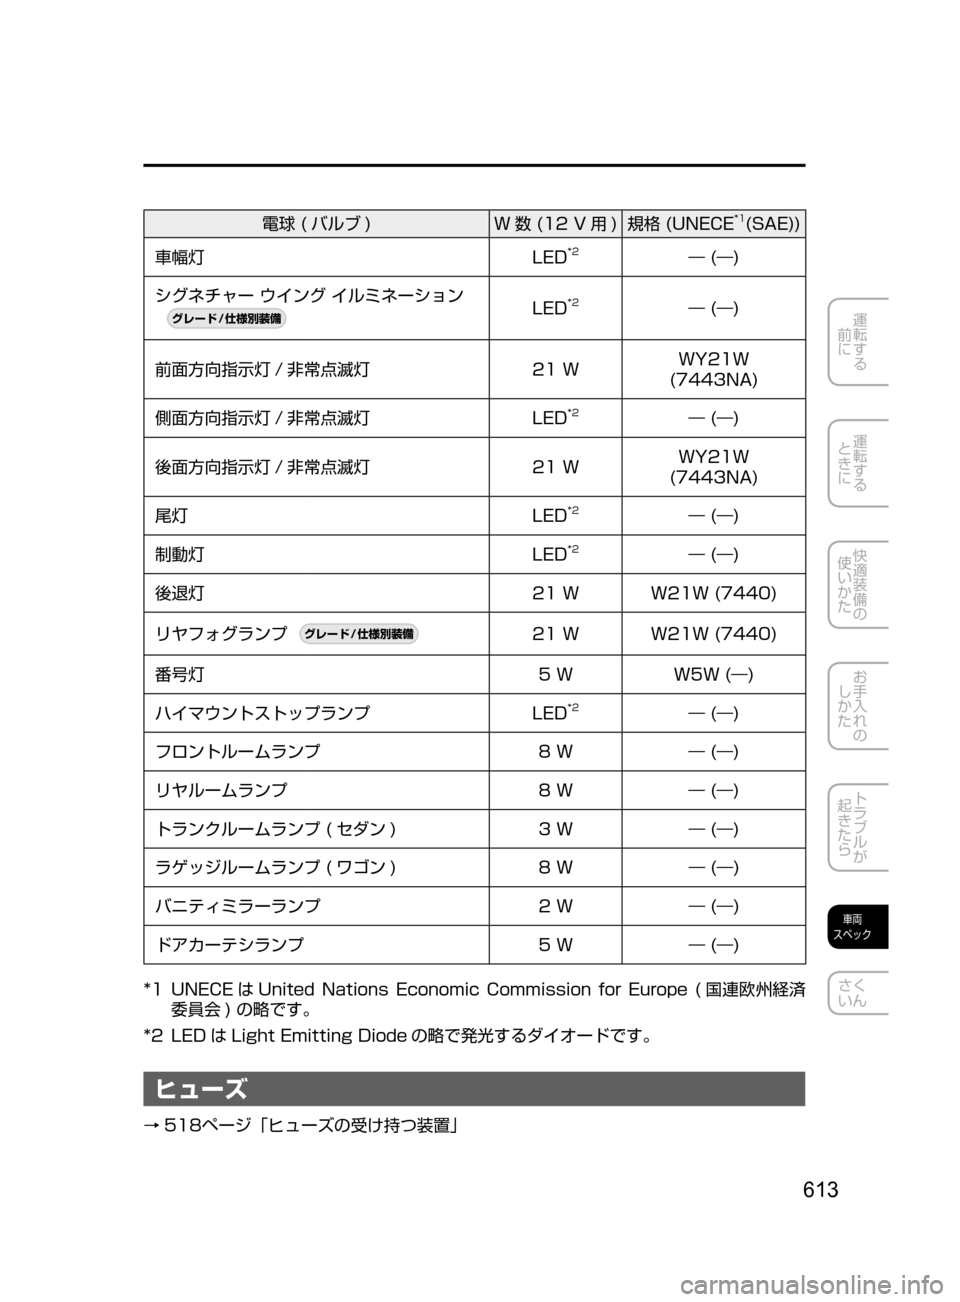 MAZDA MODEL ATENZA 2016  アテンザ｜取扱説明書 (in Japanese) 613
運転する
﻿﻿
前に
運転する
﻿﻿
ときに
快適装備の
使いかた
お手入れの
しかた
トラブルが
起きたら
車両
スペック
さく
いん
電球﻿﻿( バル�